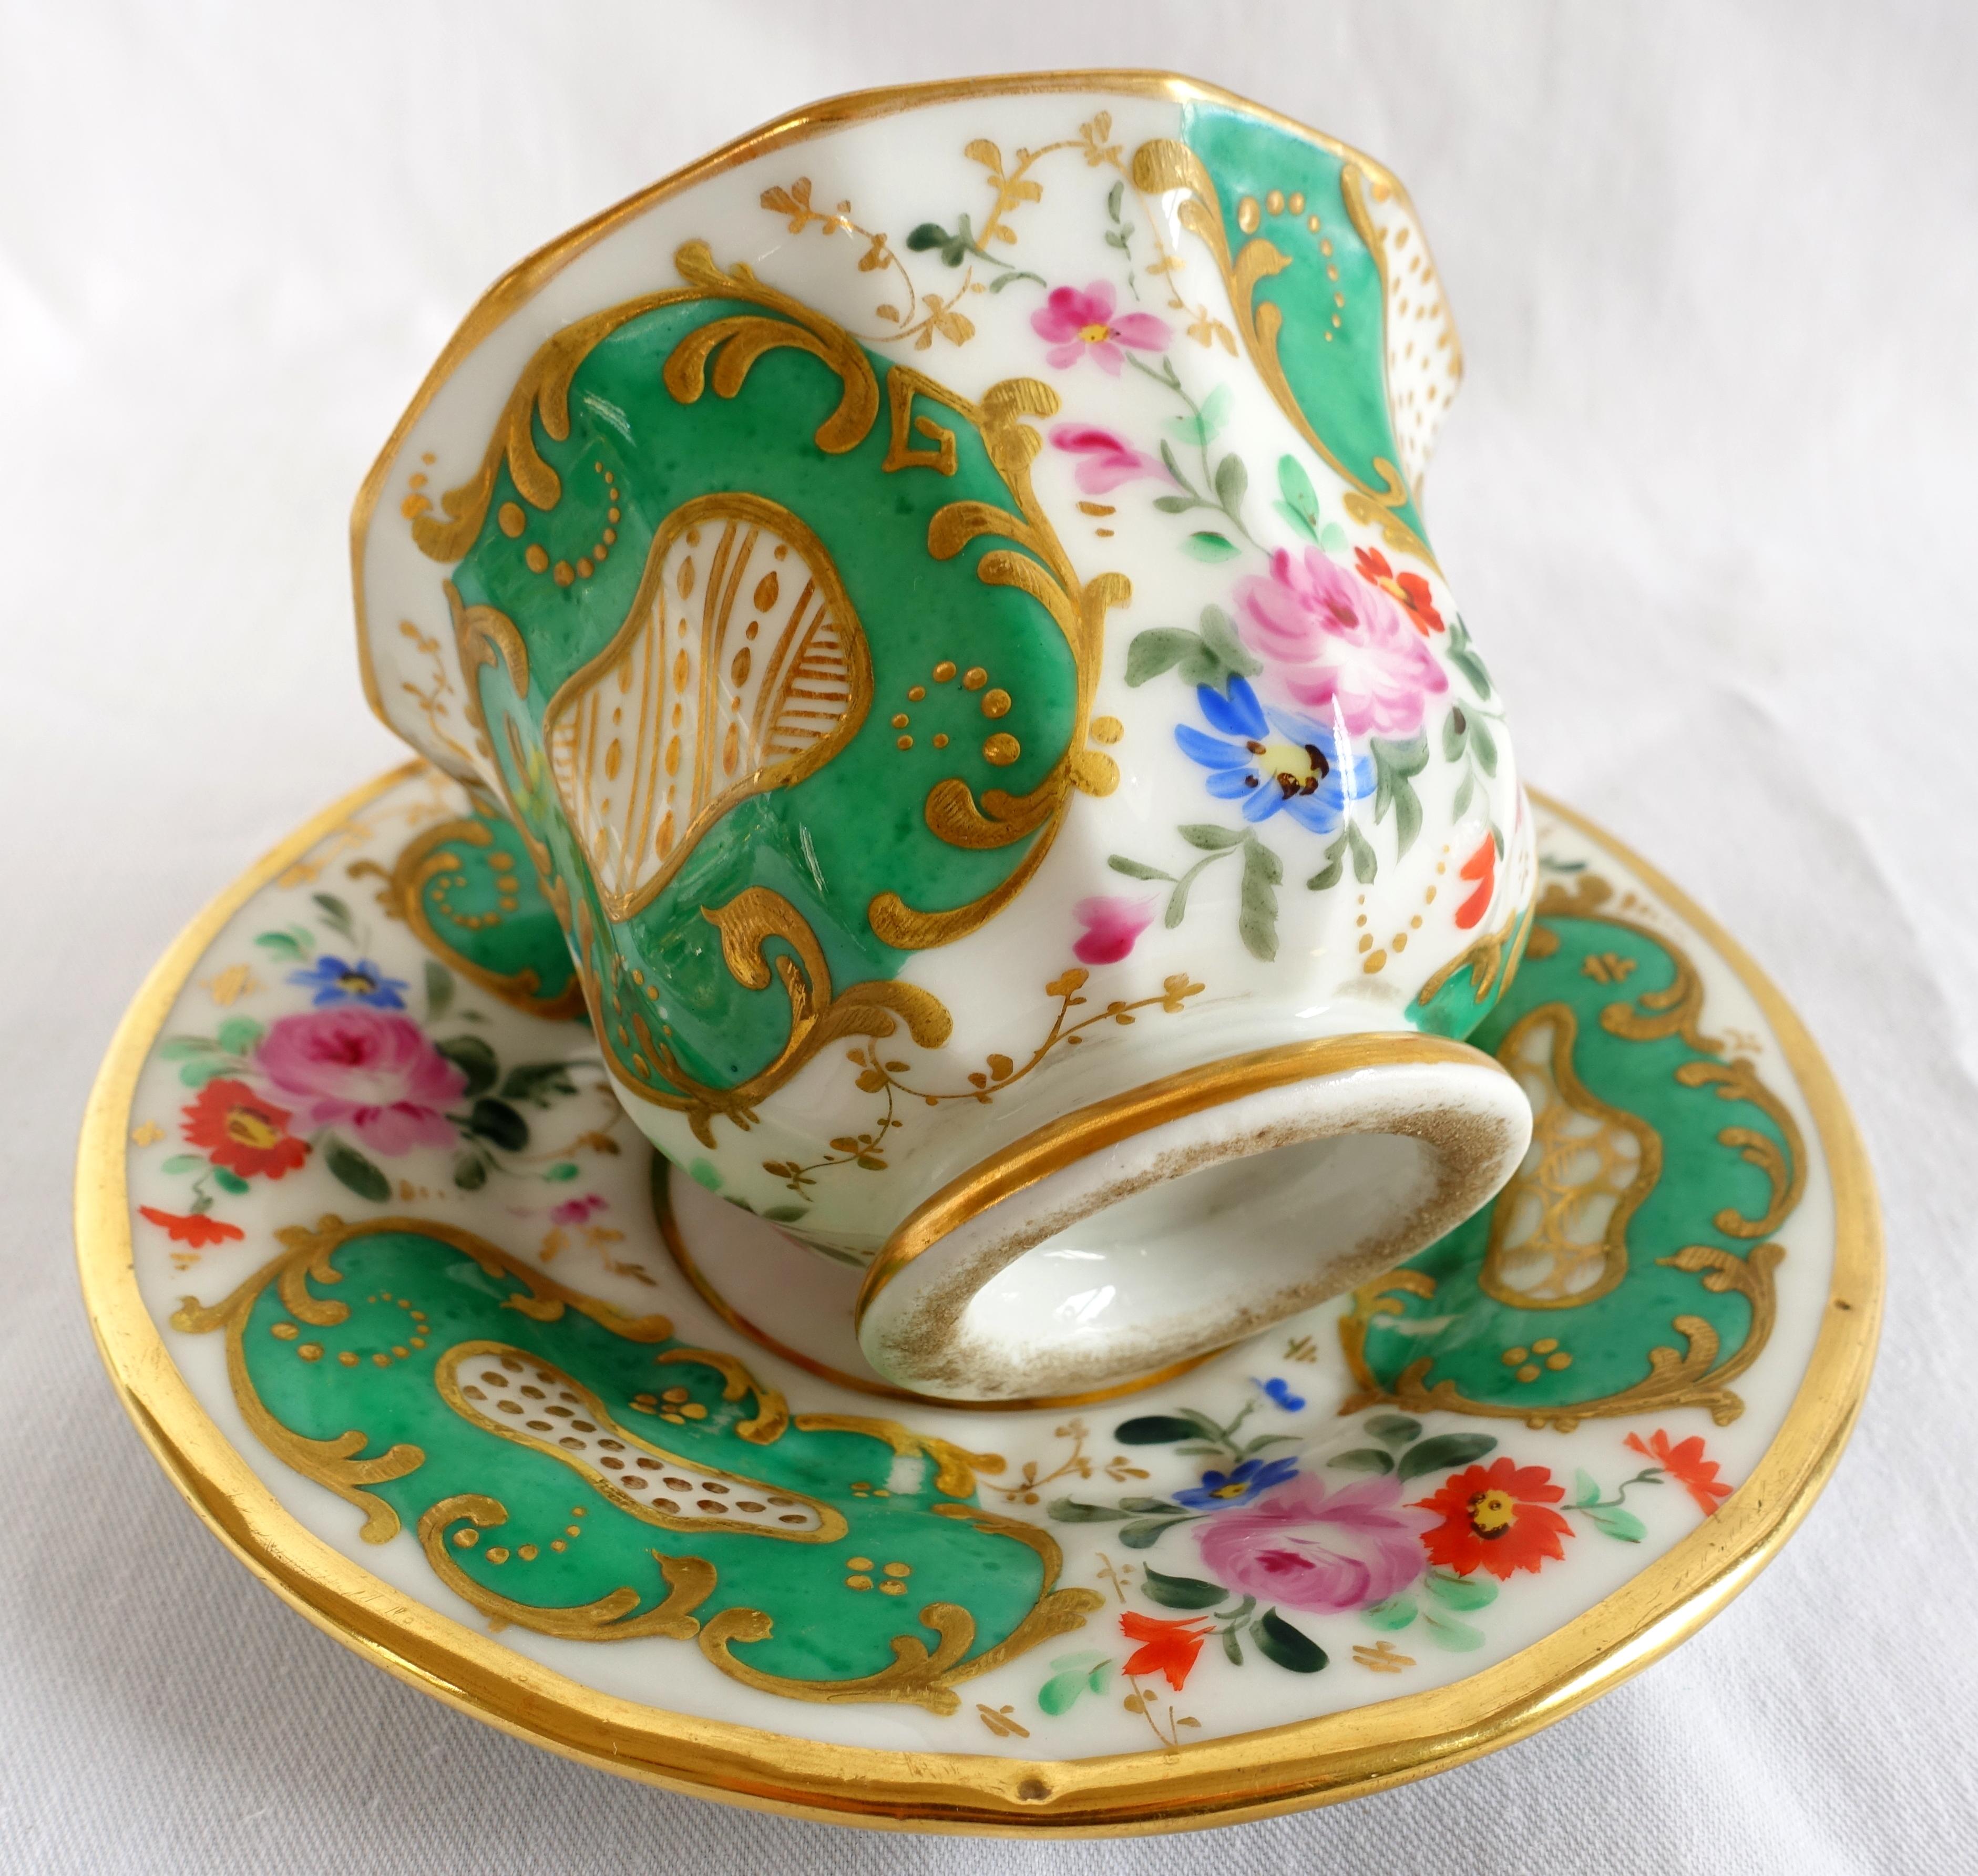 Antique French Paris porcelain coffee set for 6 - cups & saucers - 19th century 2